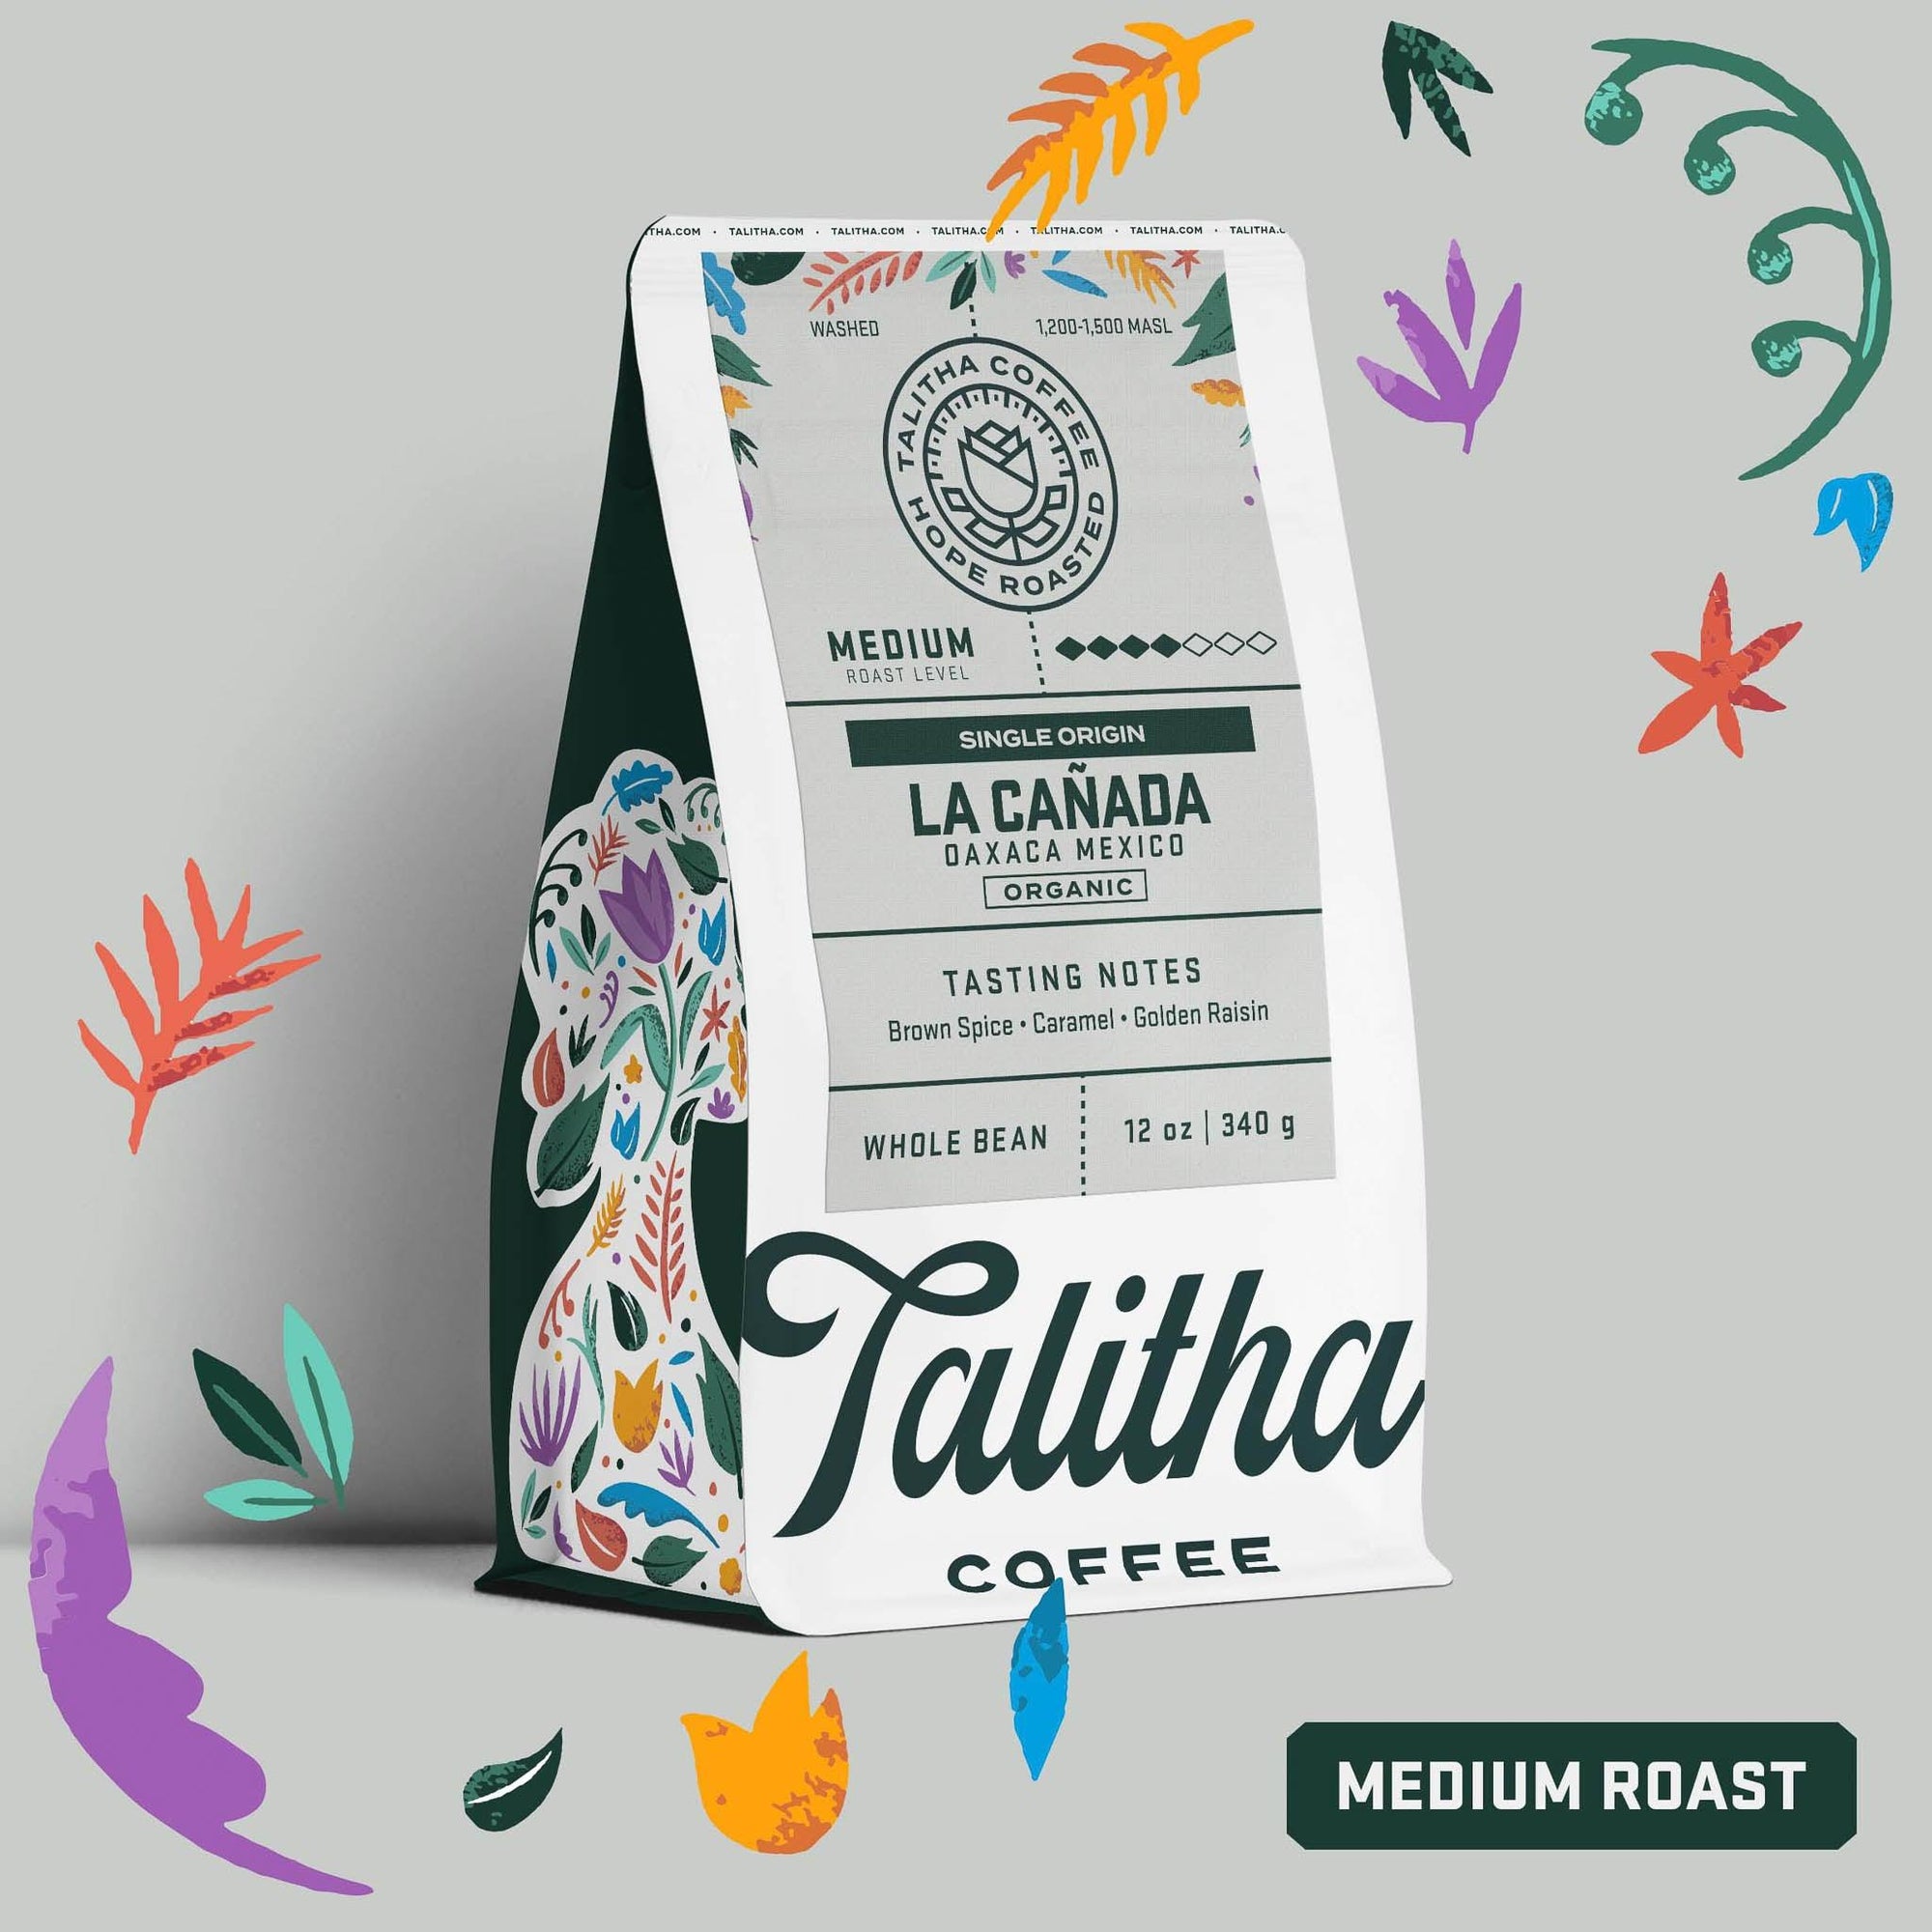 La Cañada - Mexico - Talitha Coffee